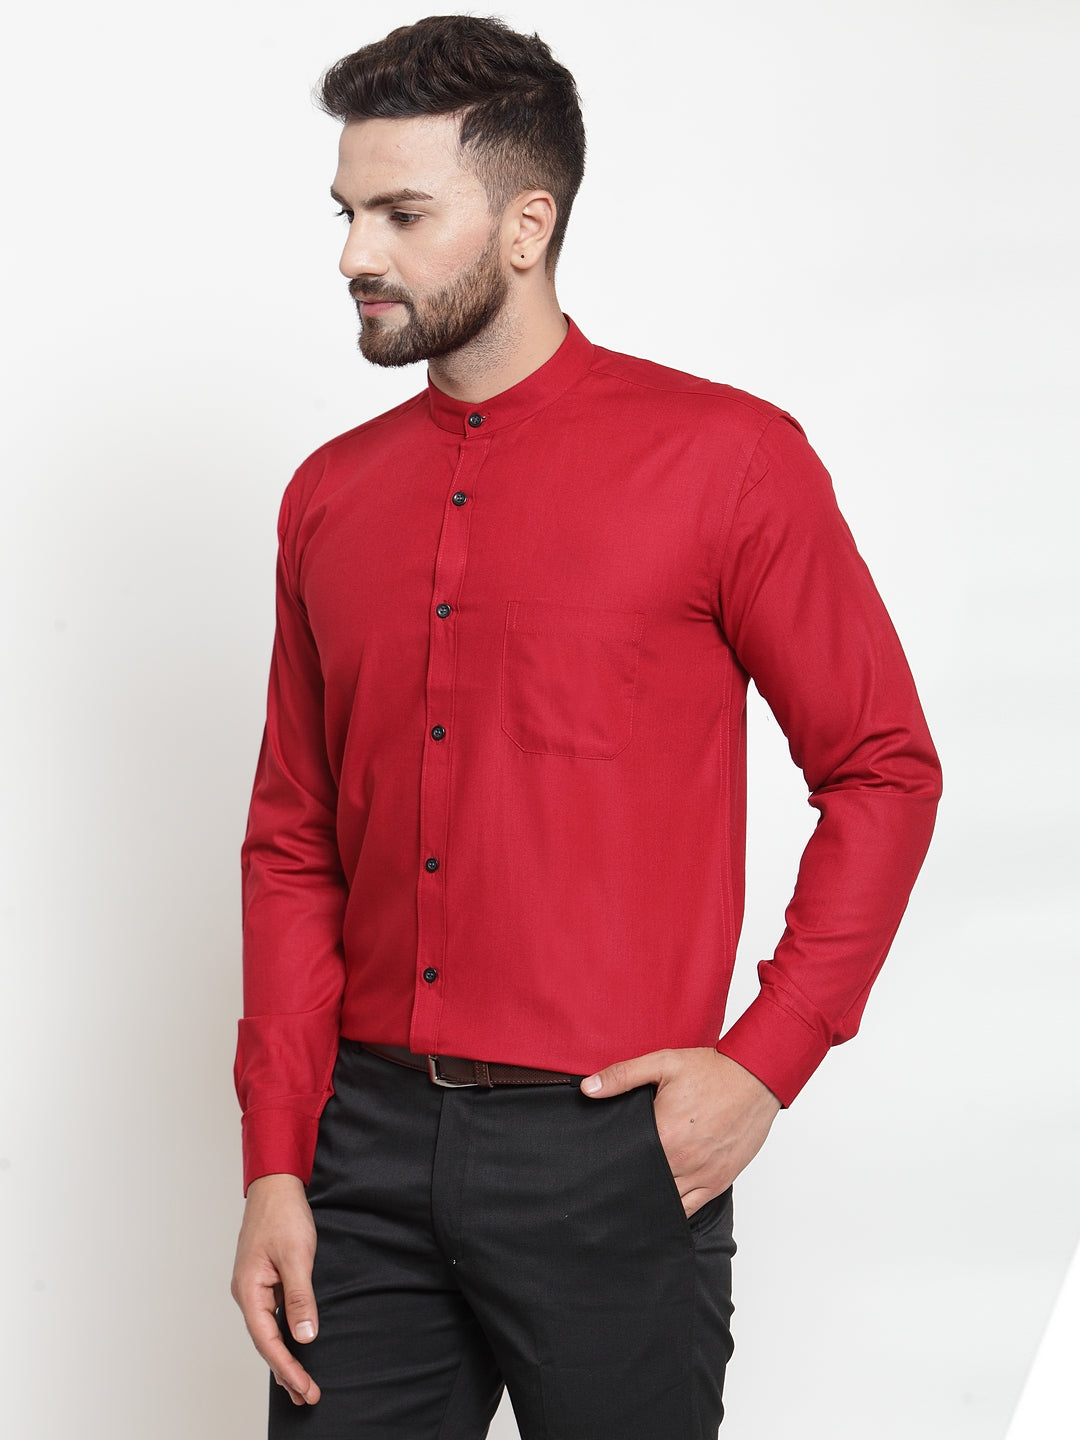 Men's Maroon Cotton Solid Mandarin Collar Formal Shirts ( SF 726Maroon ) - Jainish